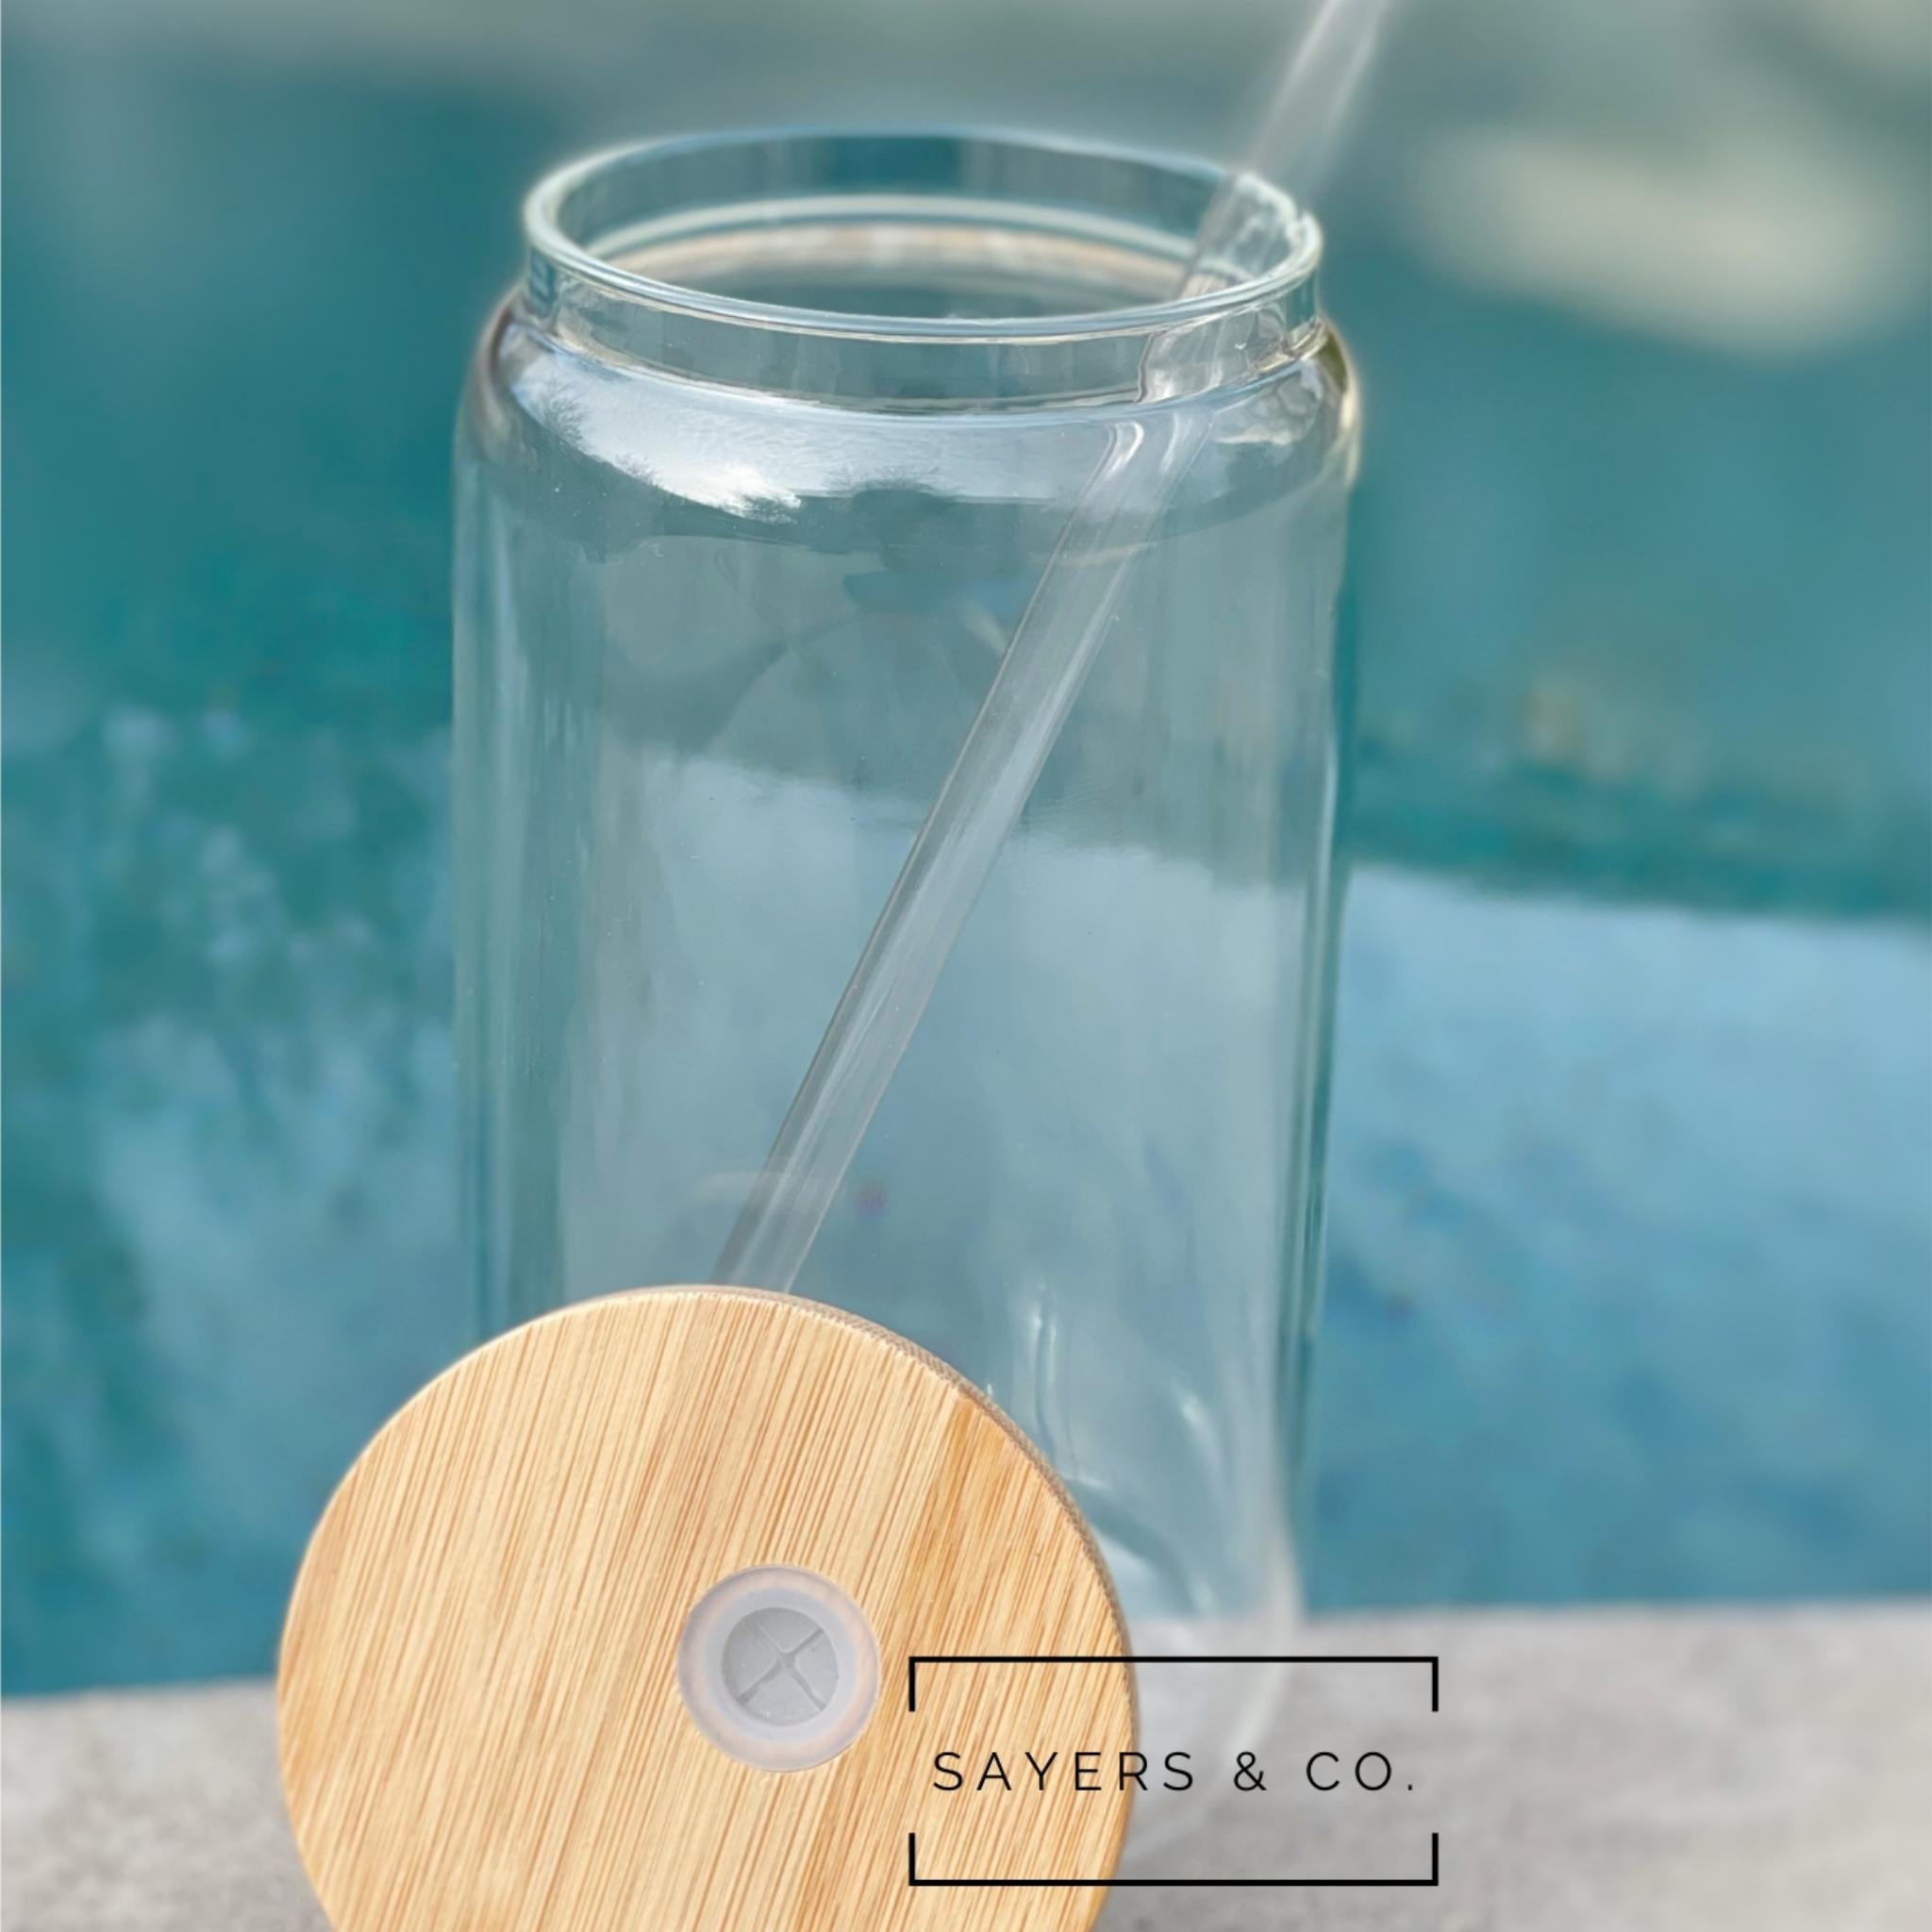 16oz Sublimation Glass Clear Jars